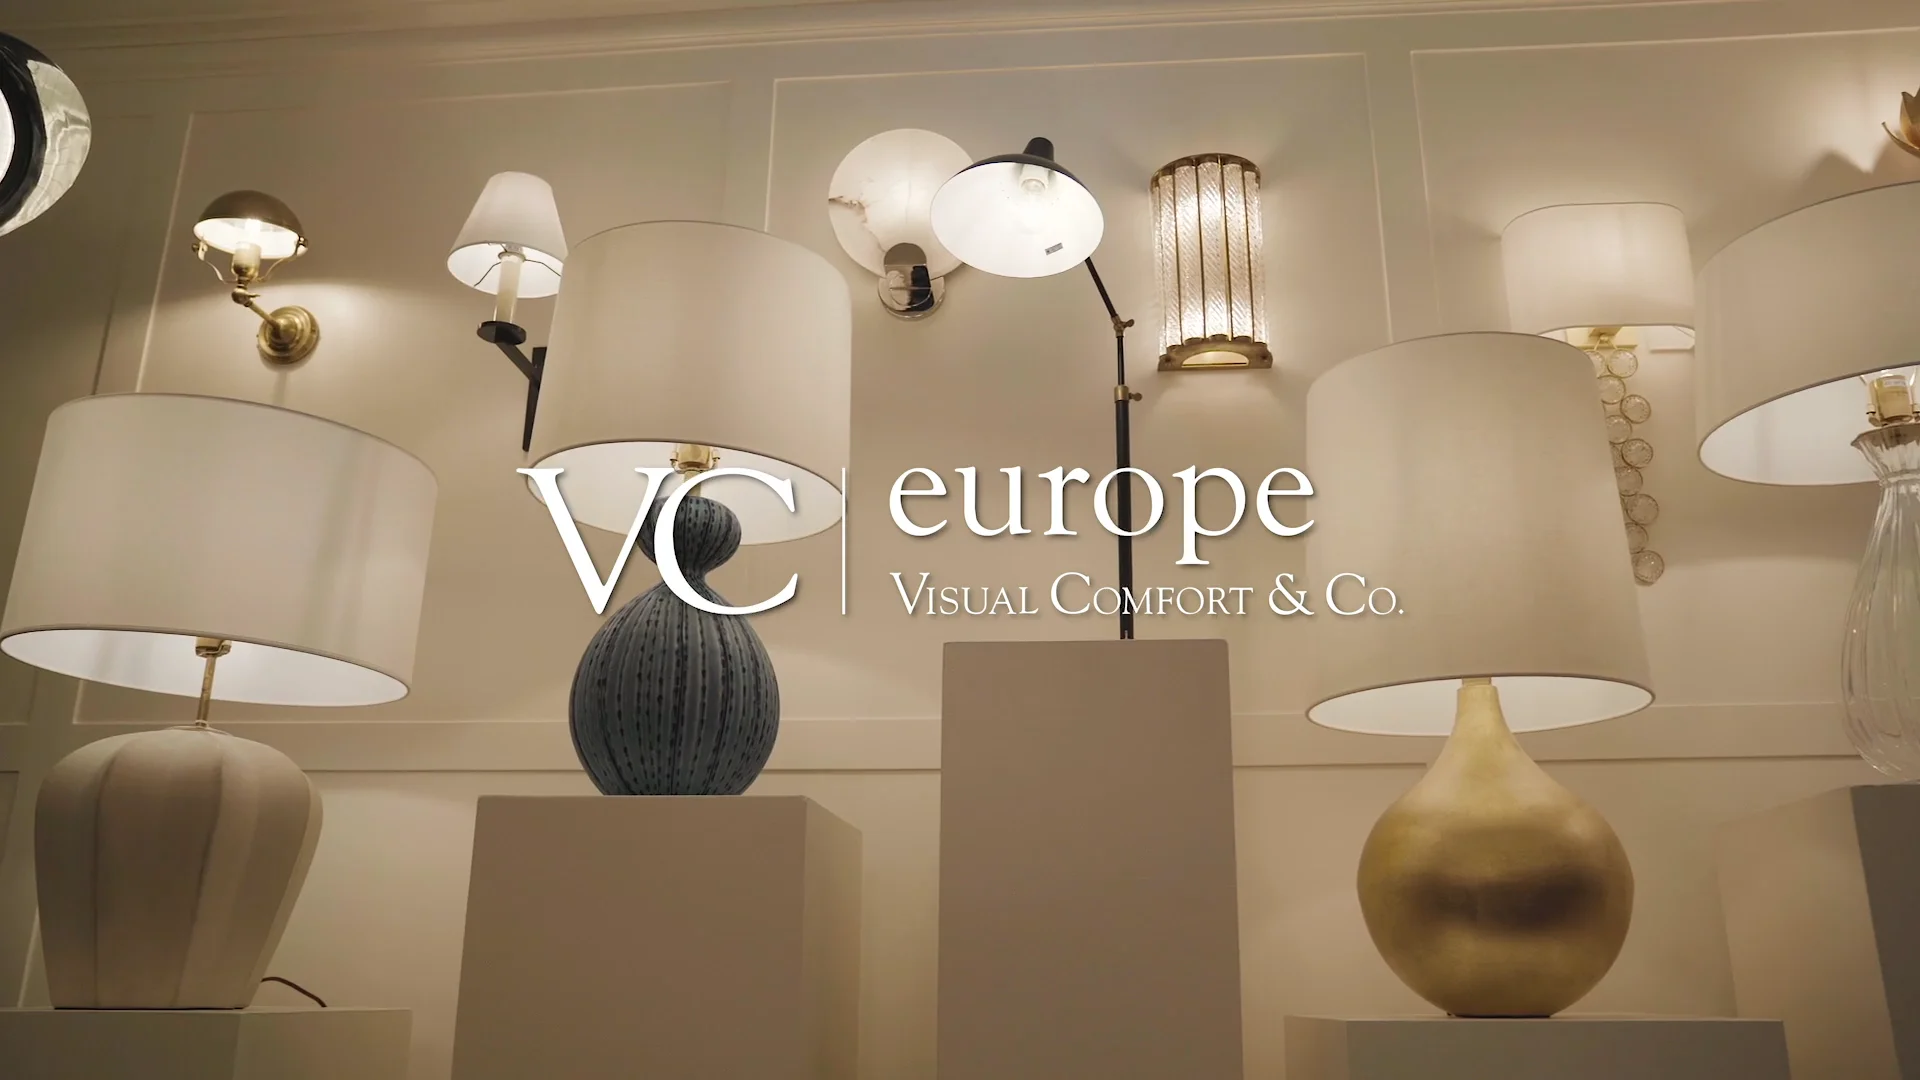 Visual Comfort Europe: Interior lighting